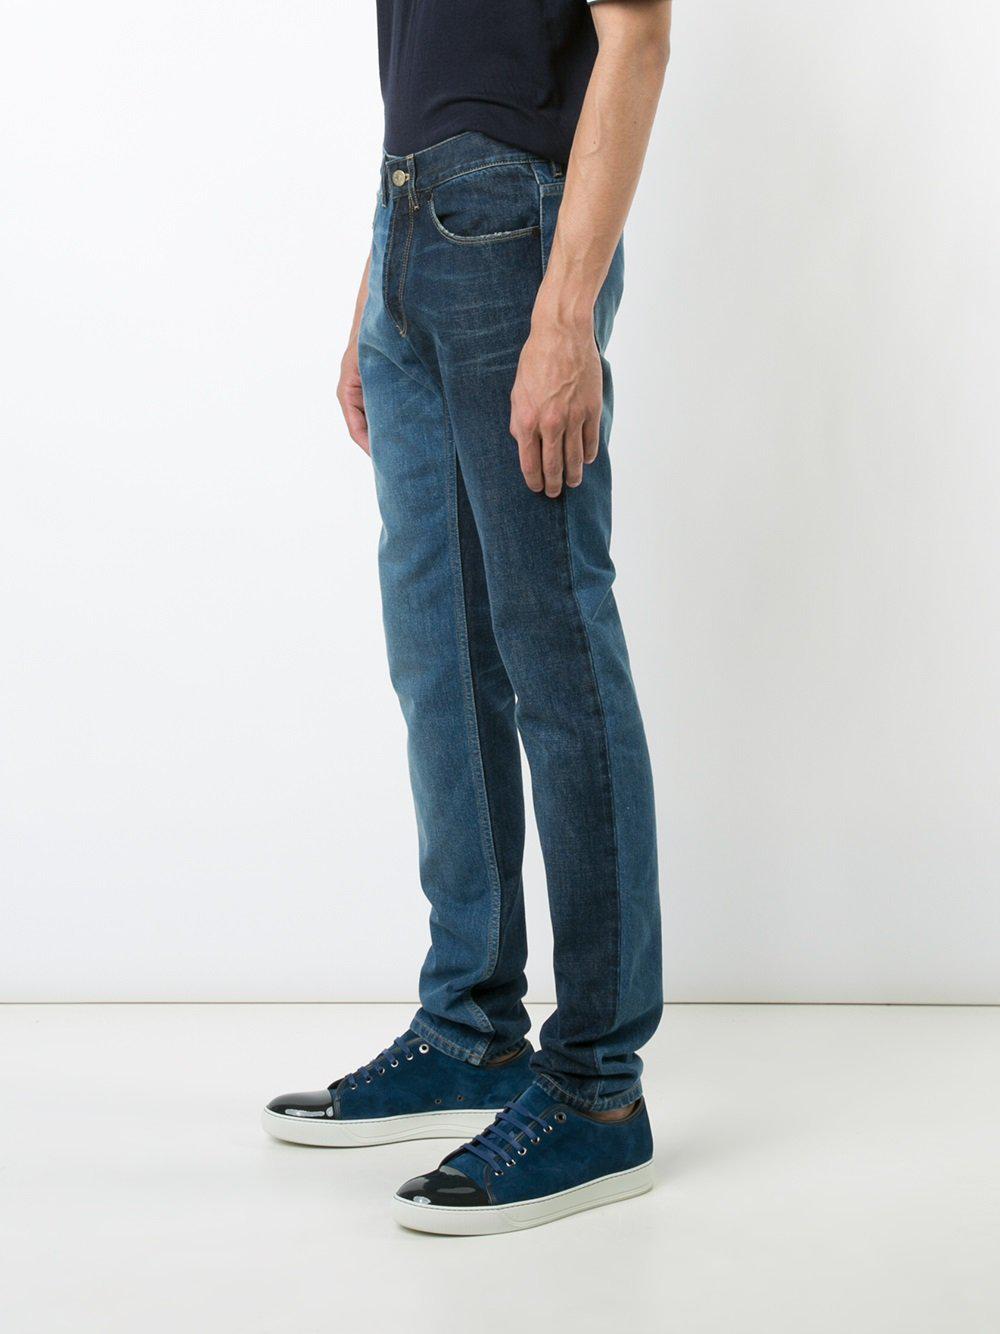 Lyst - Lanvin Two-tone Contrast Skinny Jeans in Blue for Men